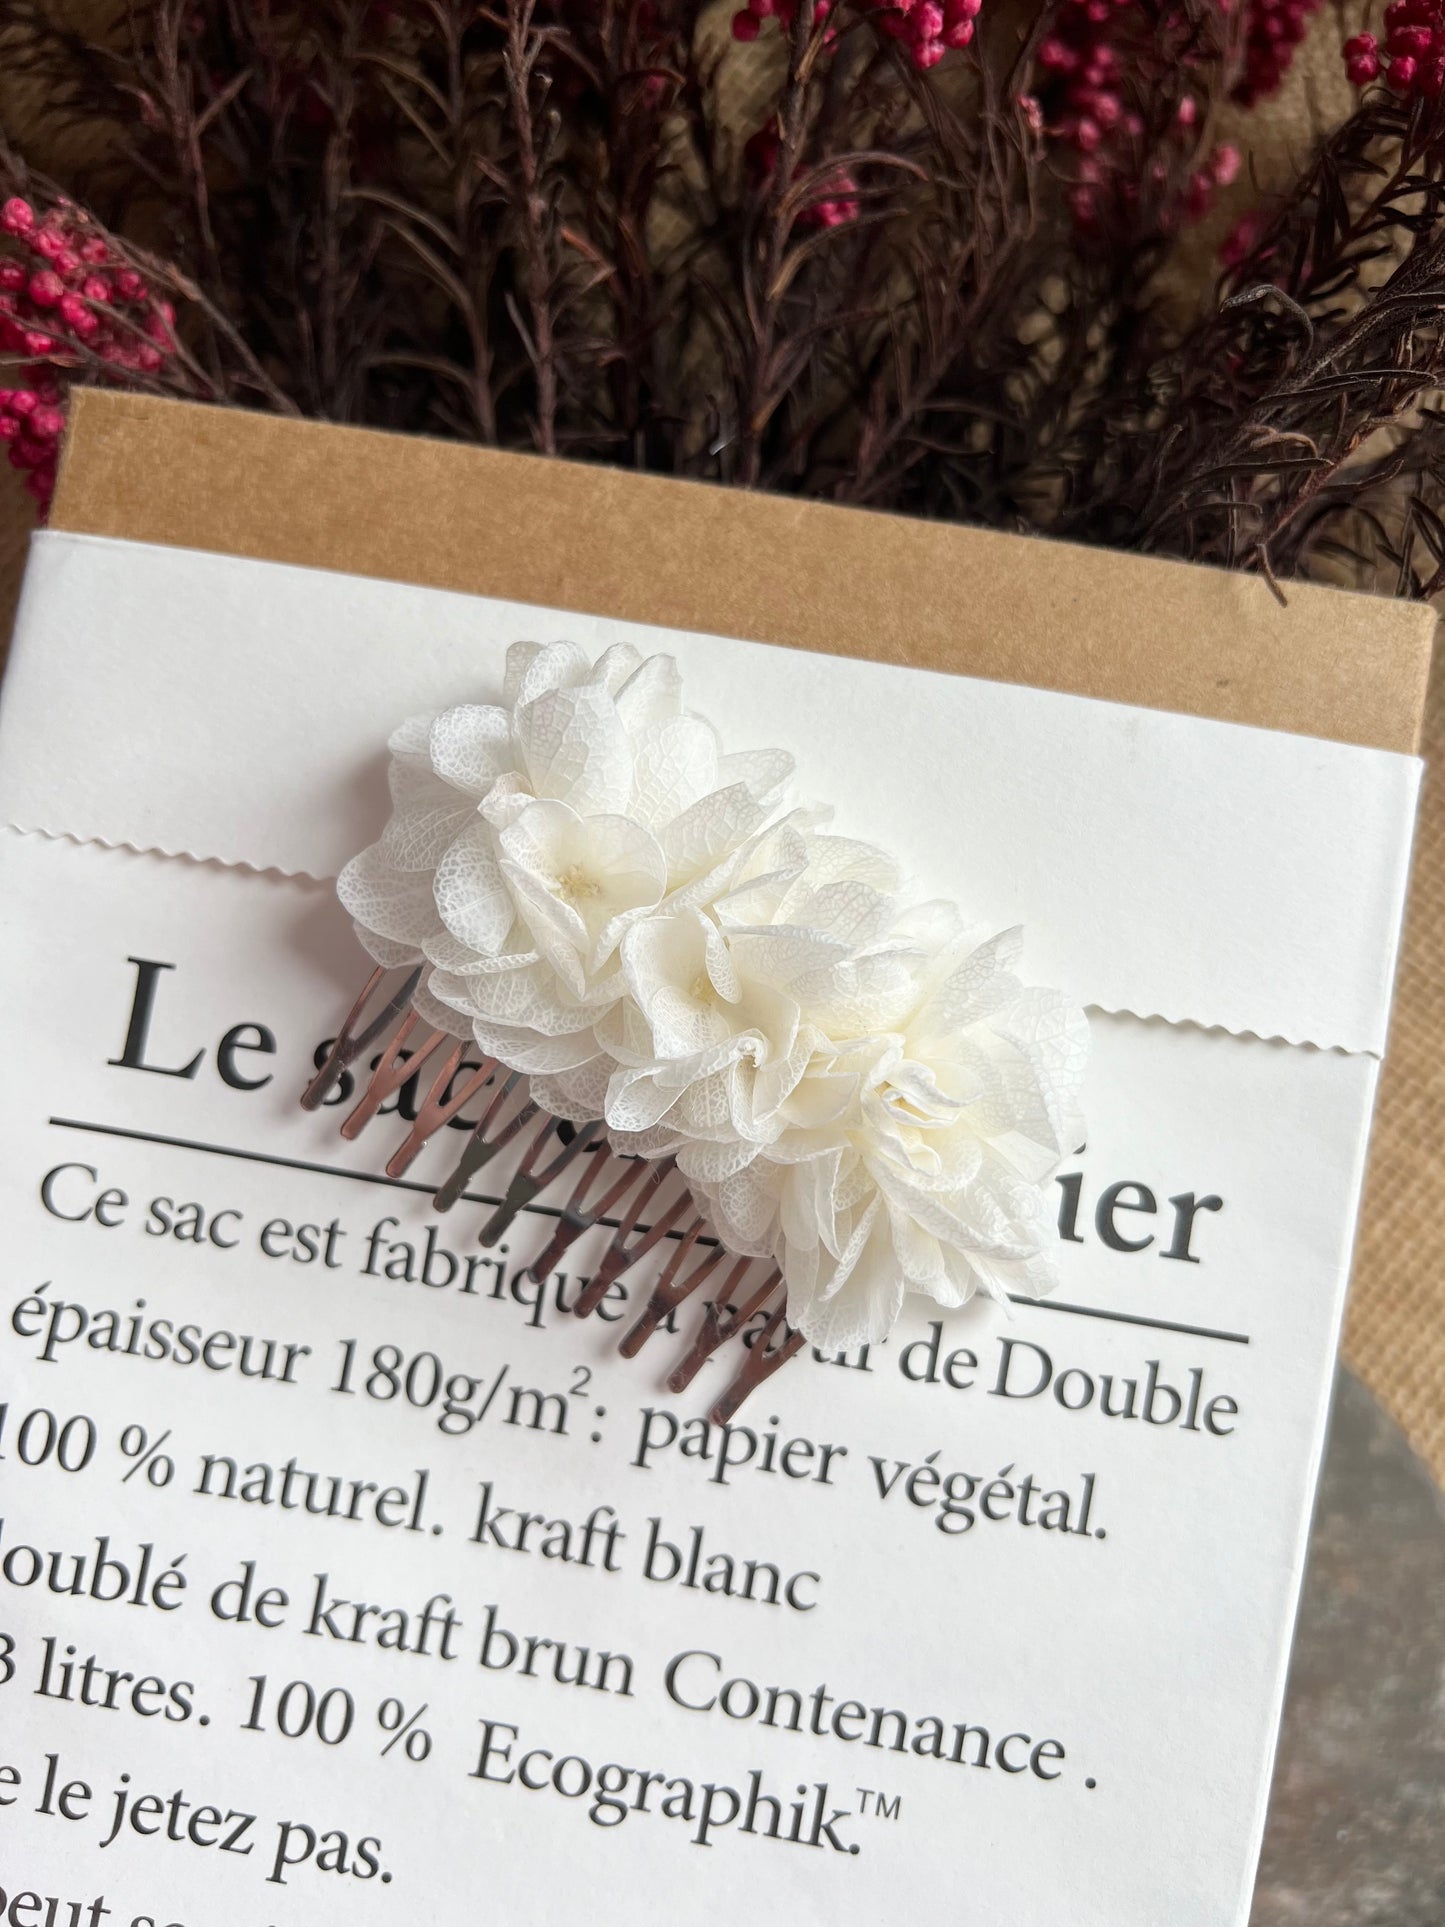 Bridal Flower Mini Comb White Pale Ivory, Minimalist Wedding Hair Pins, Bridal Hair Accessories, Dried Flower Updo Hair Floral Hair Comb